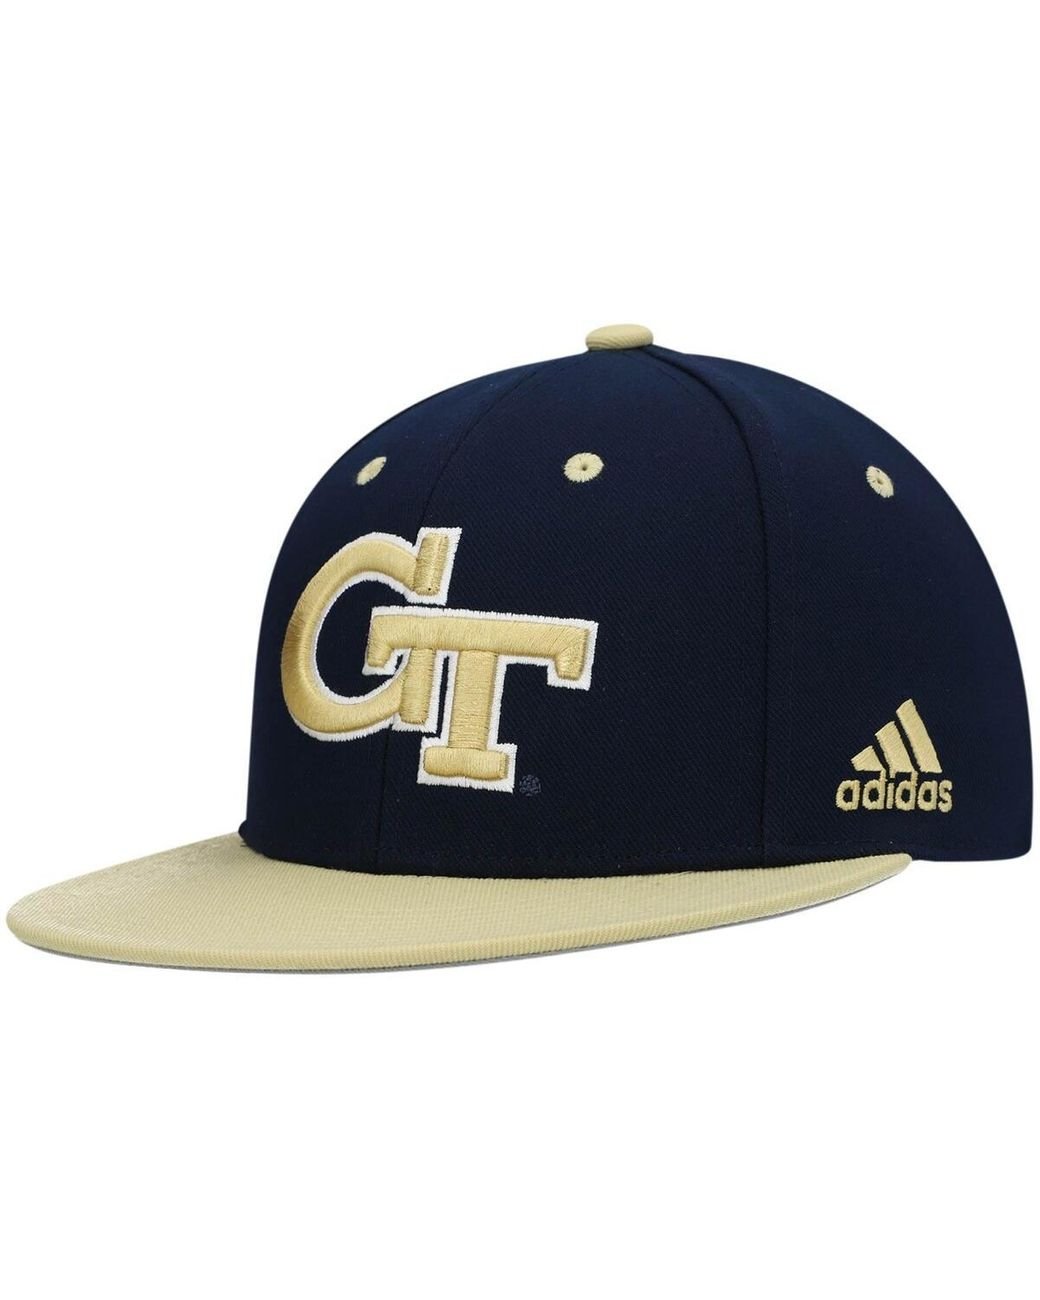 adidas Navy And Gold Georgia Tech Yellow Jackets On-field Baseball